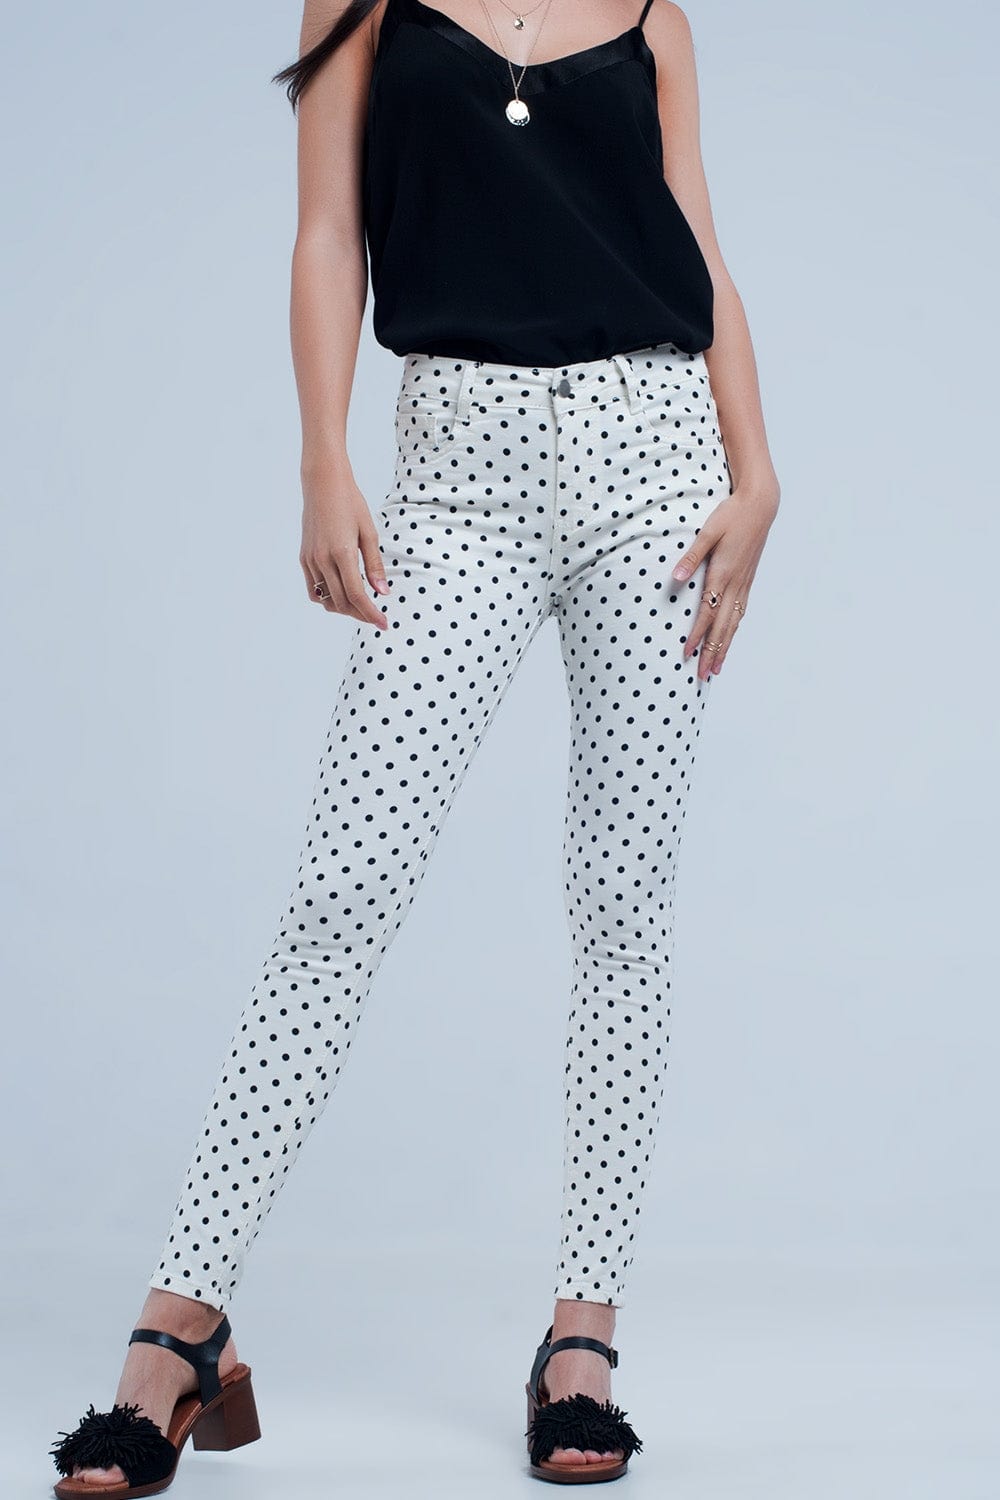 Q2 Women's Jean White Jeans in Polka Dots